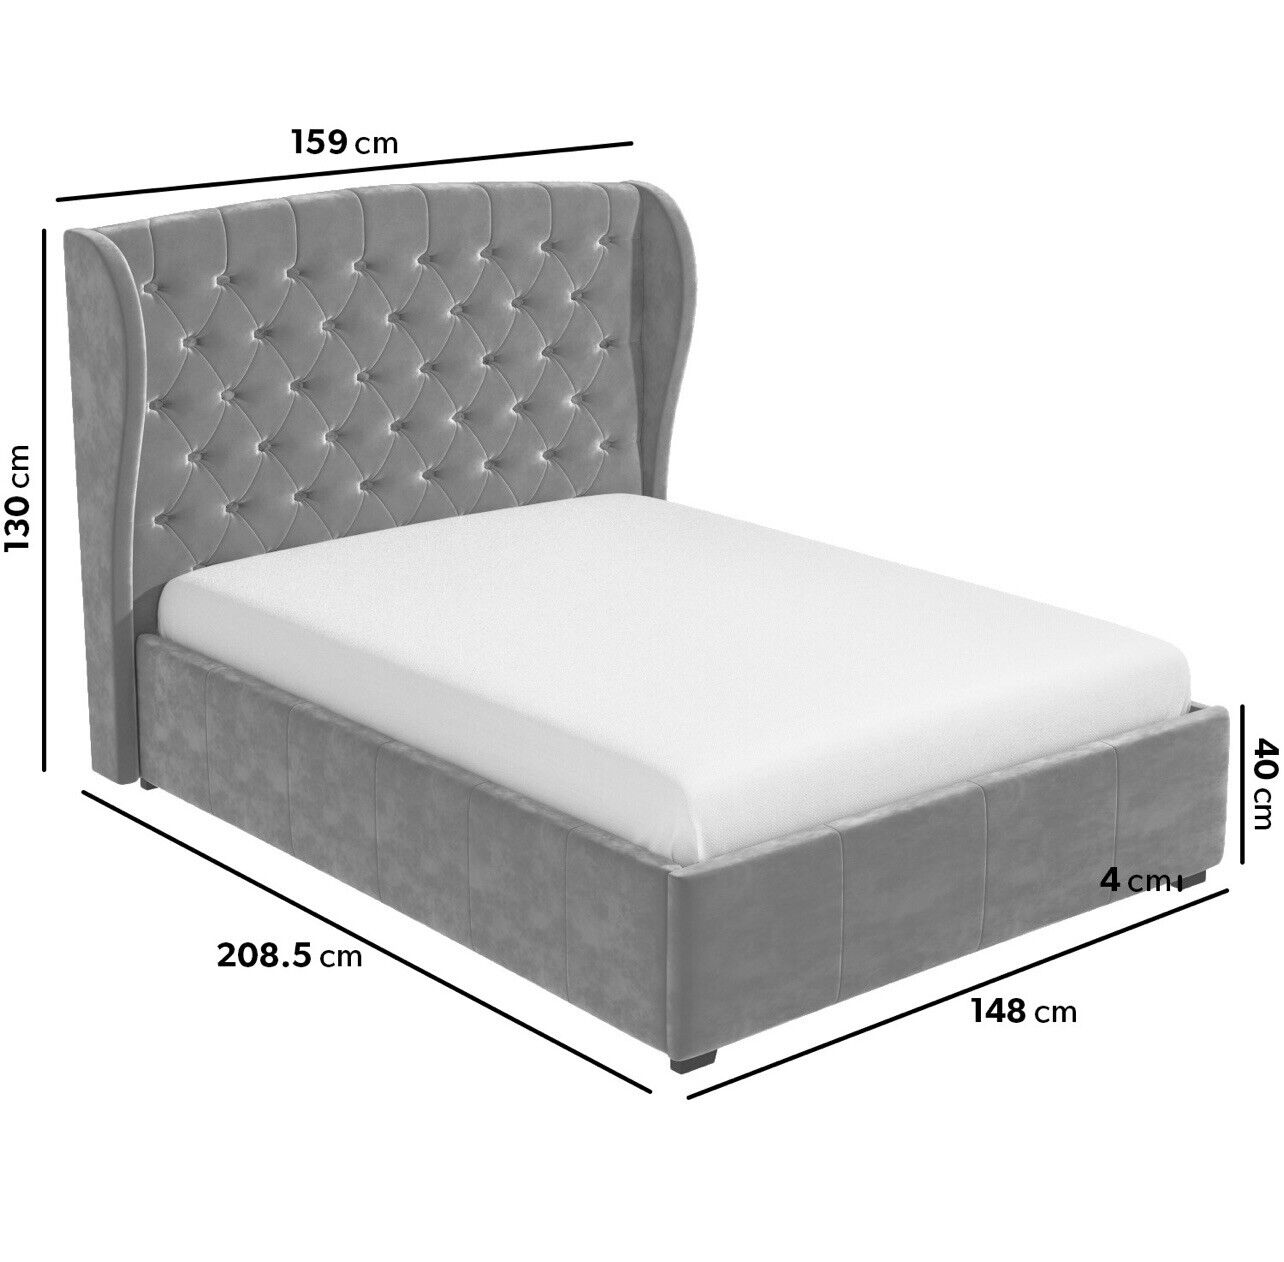 Velvet Double Bed in Grey with Storage